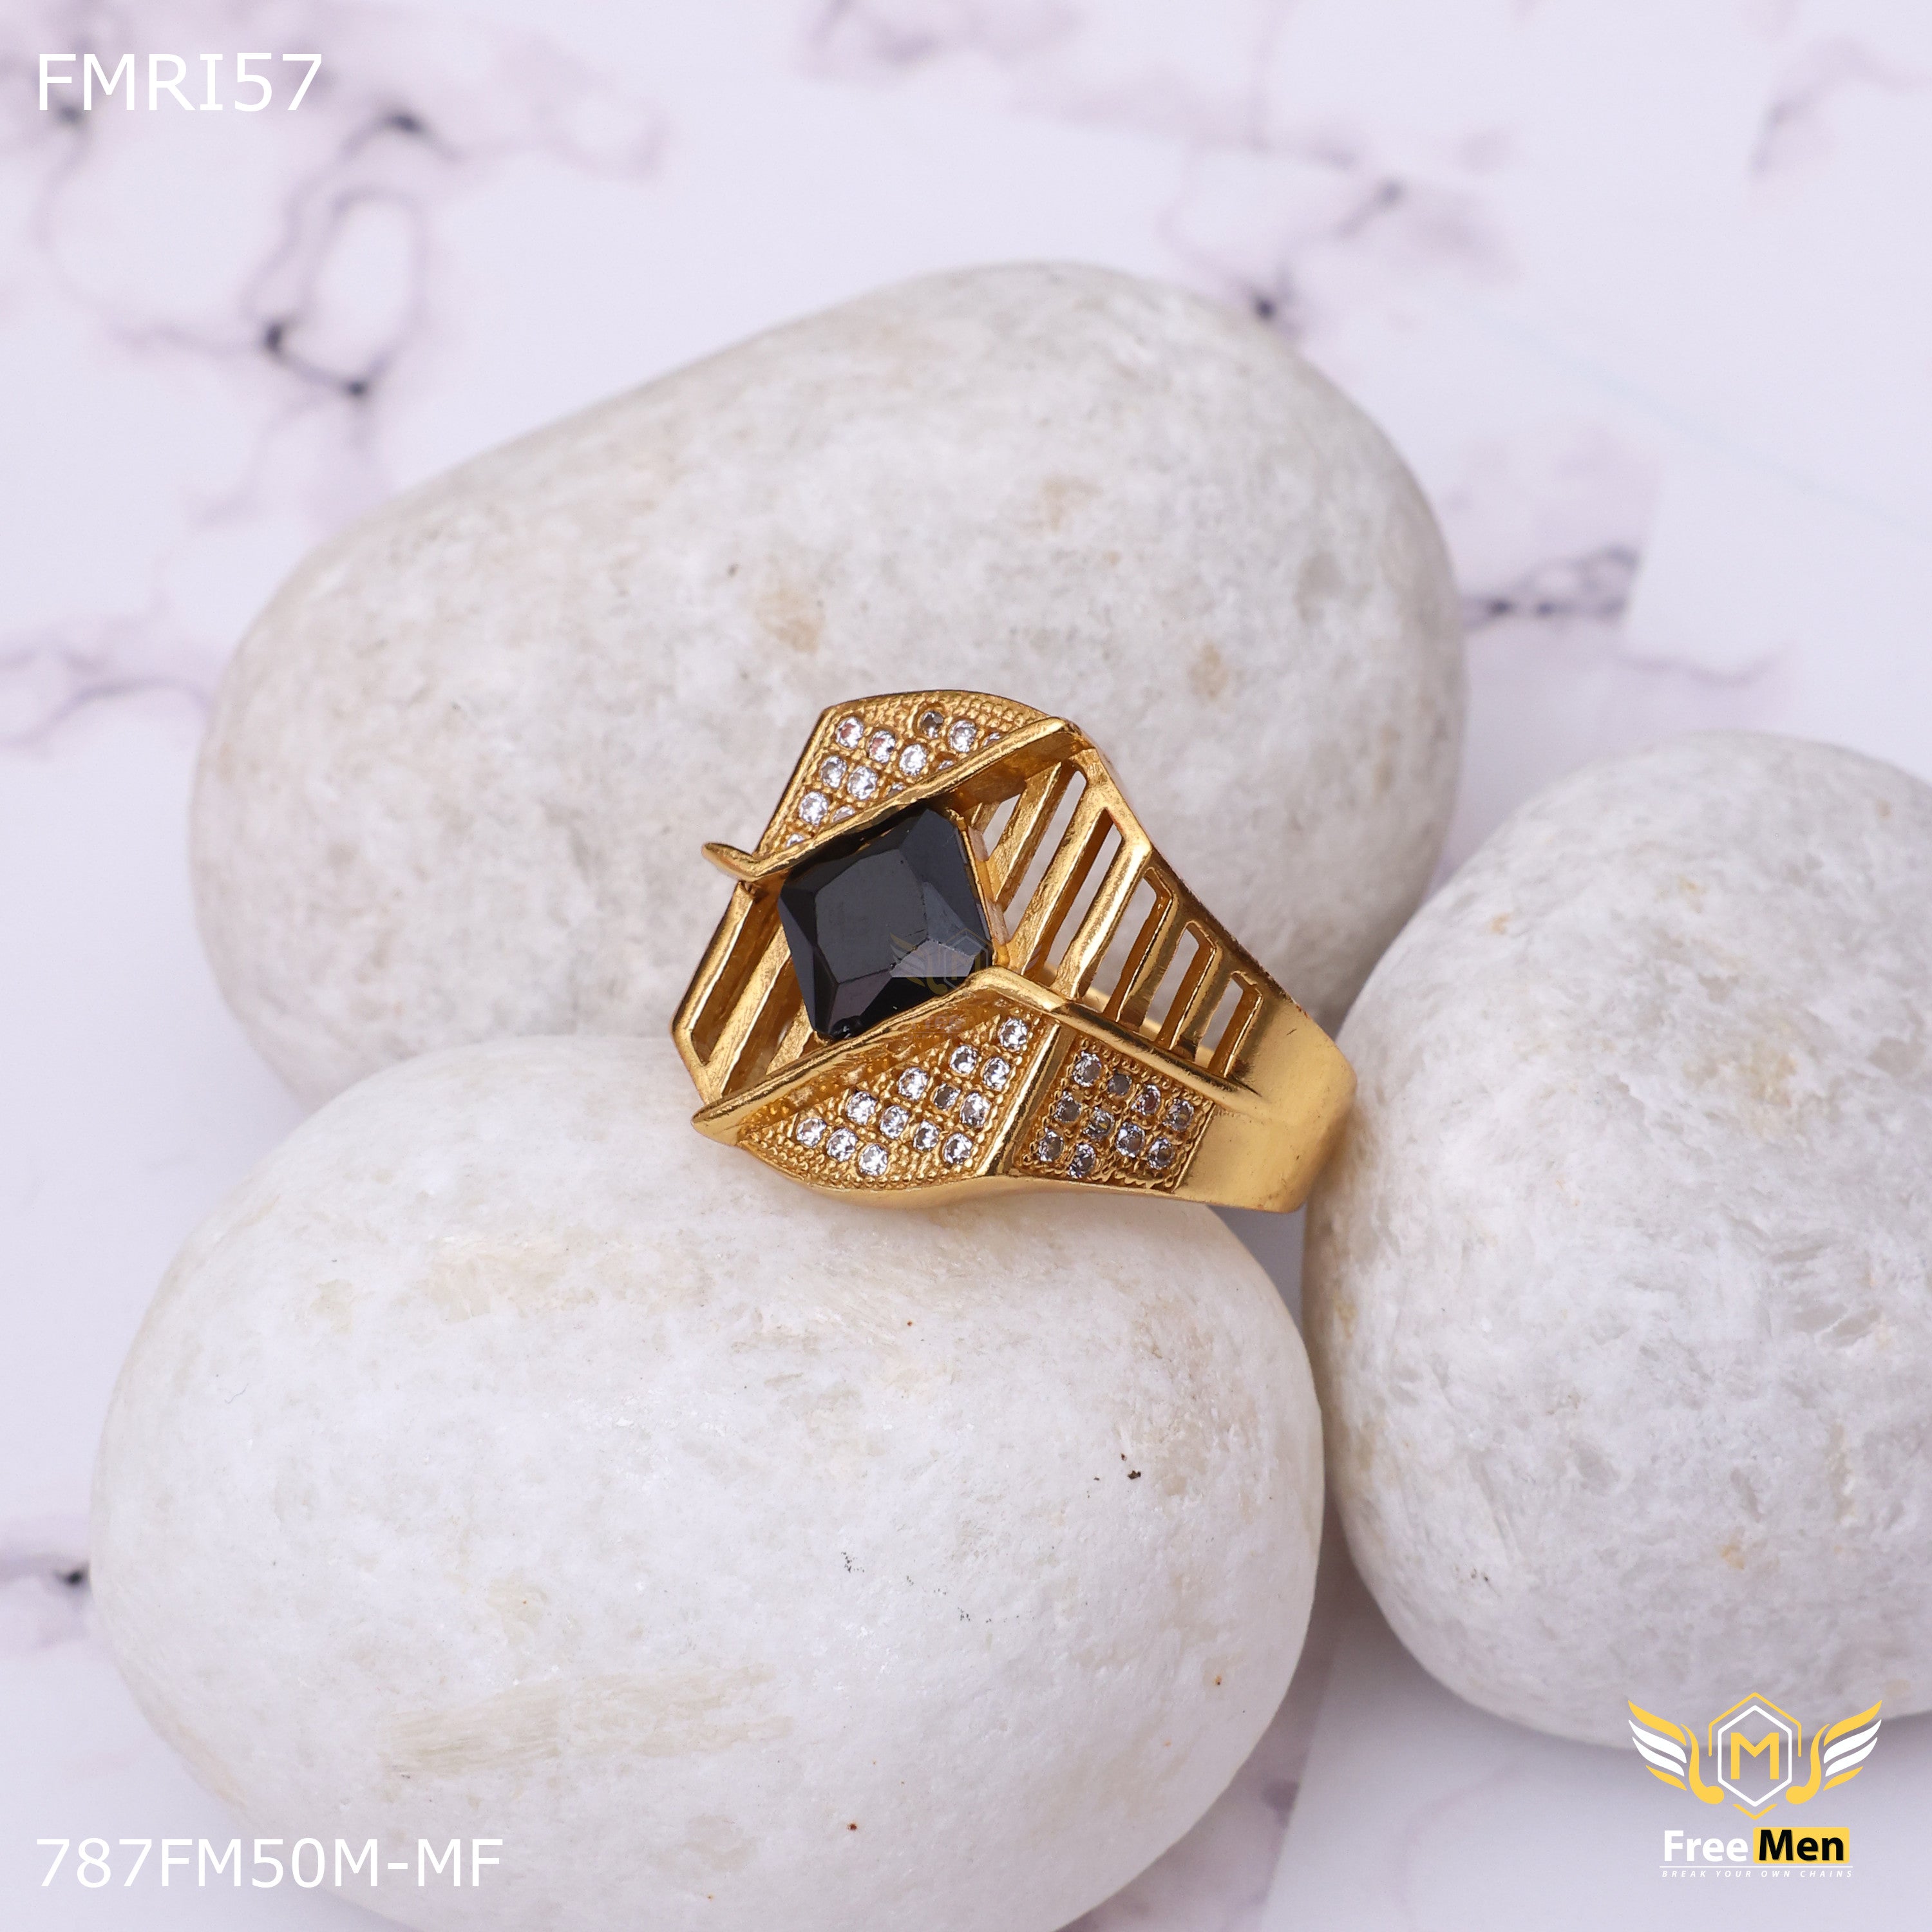 Delightful 22K Gold 4CT Yellow Sapphire Ring – Andaaz Jewelers